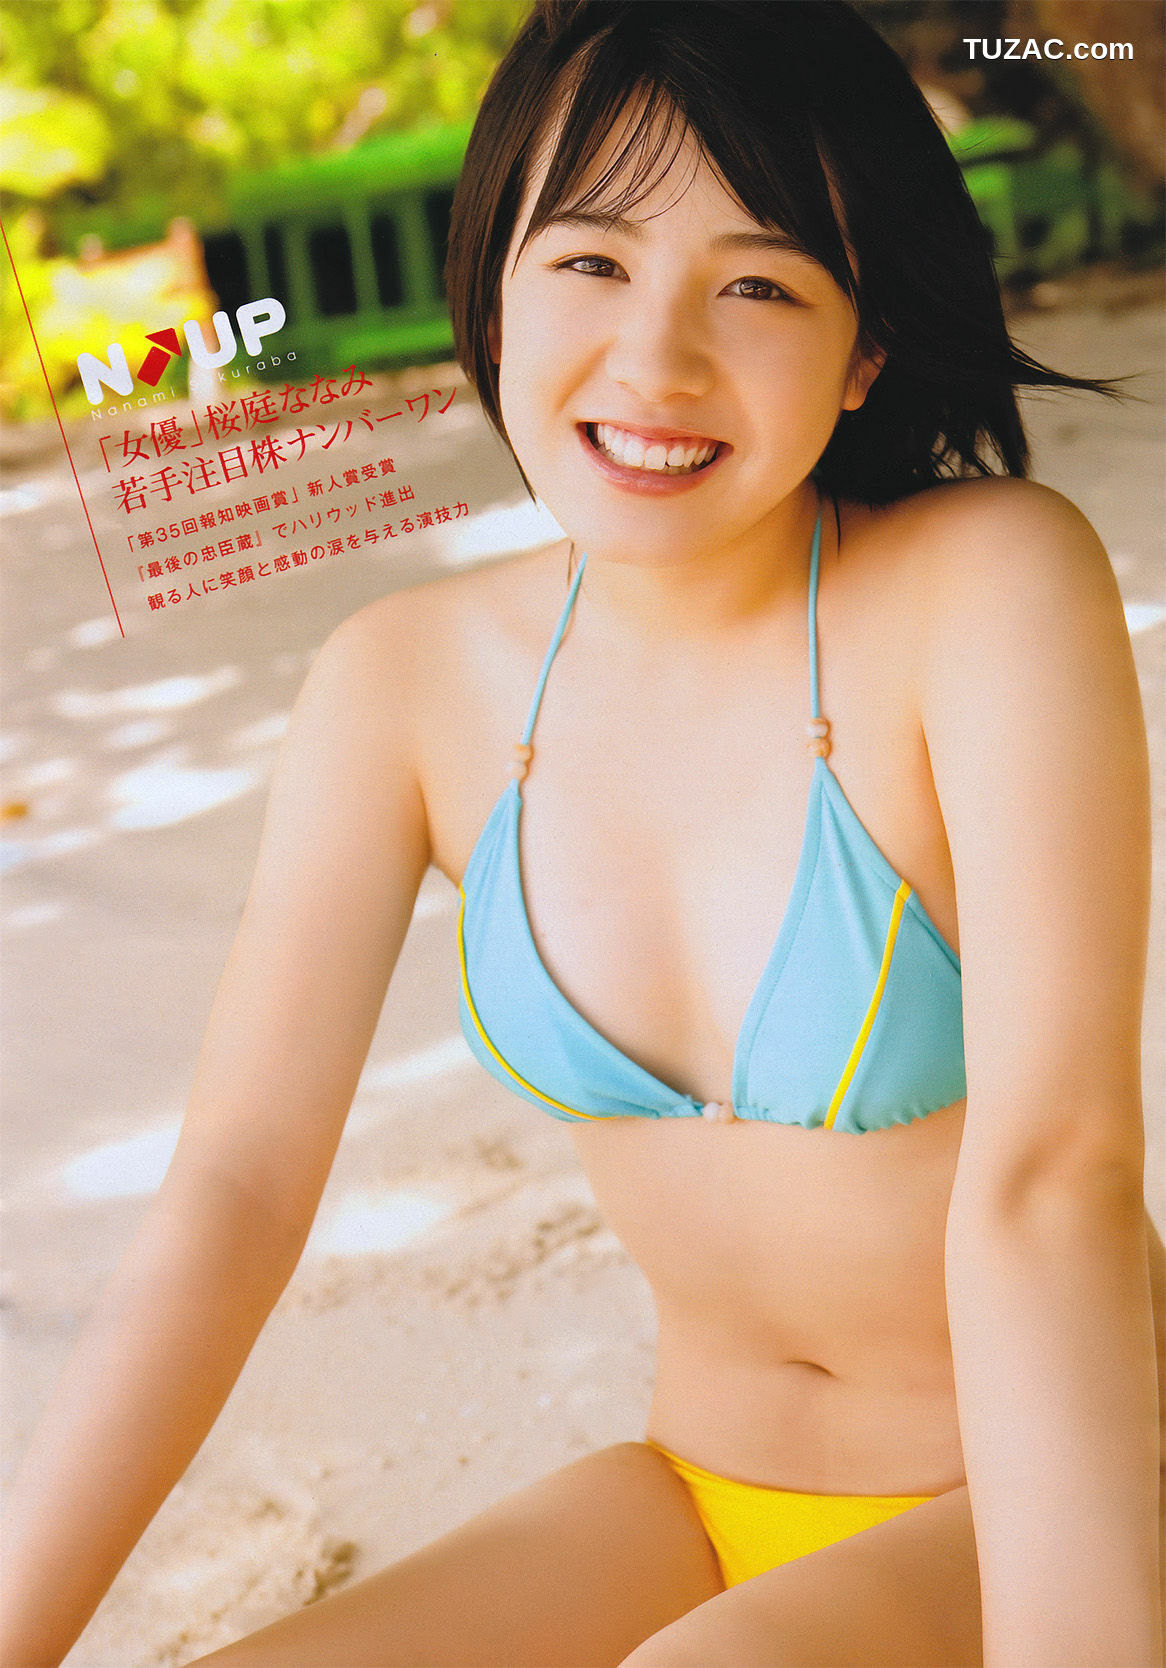 Young Magazine杂志写真_ 桜庭ななみ 2011年No.08 写真杂志[17P]